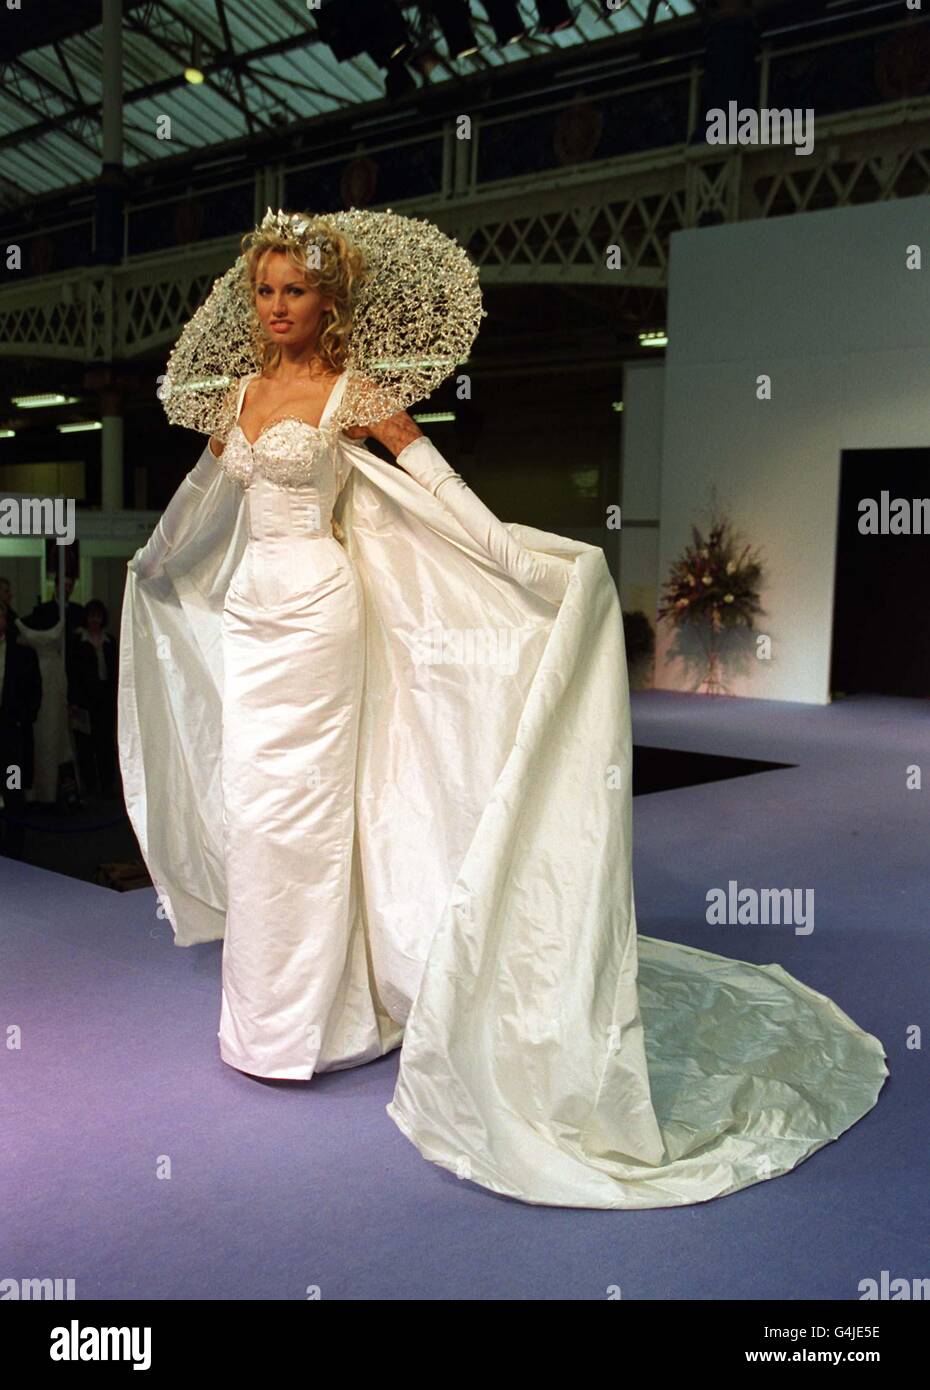 Sklenarikova /Wedding gown Stock Photo - Alamy